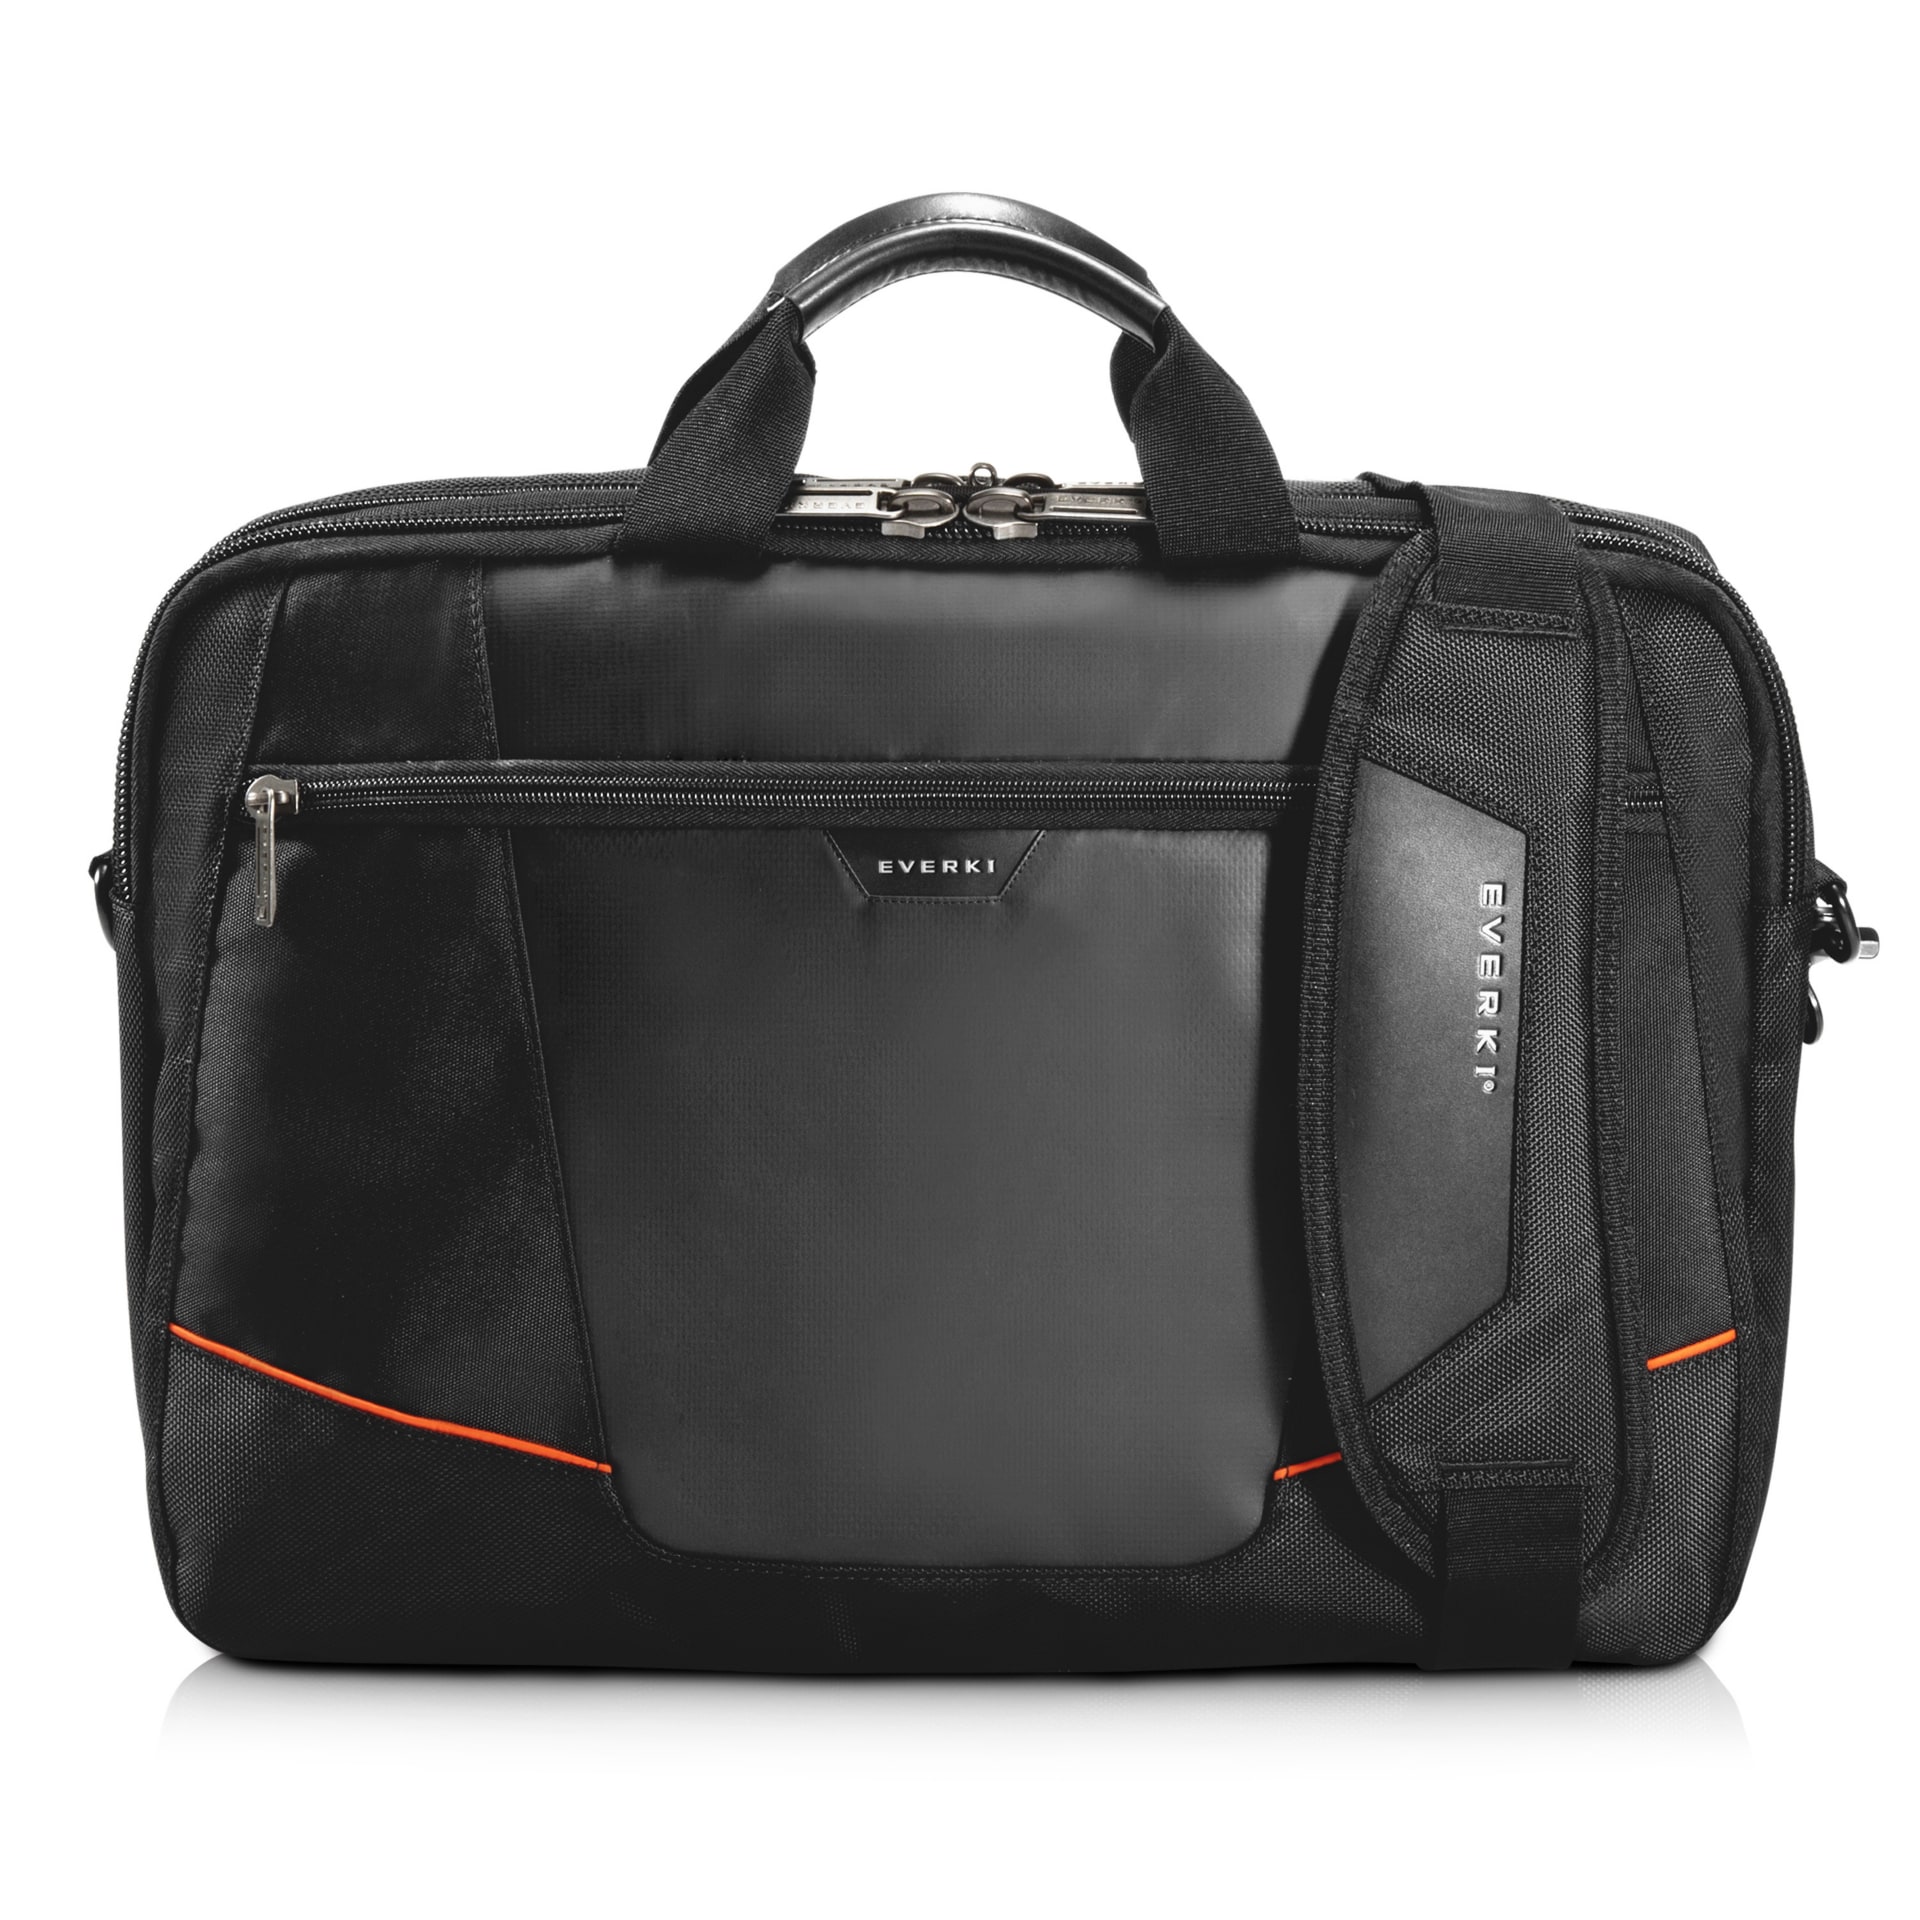 Everki Flight Checkpoint Friendly Laptop Bag - notebook carrying case